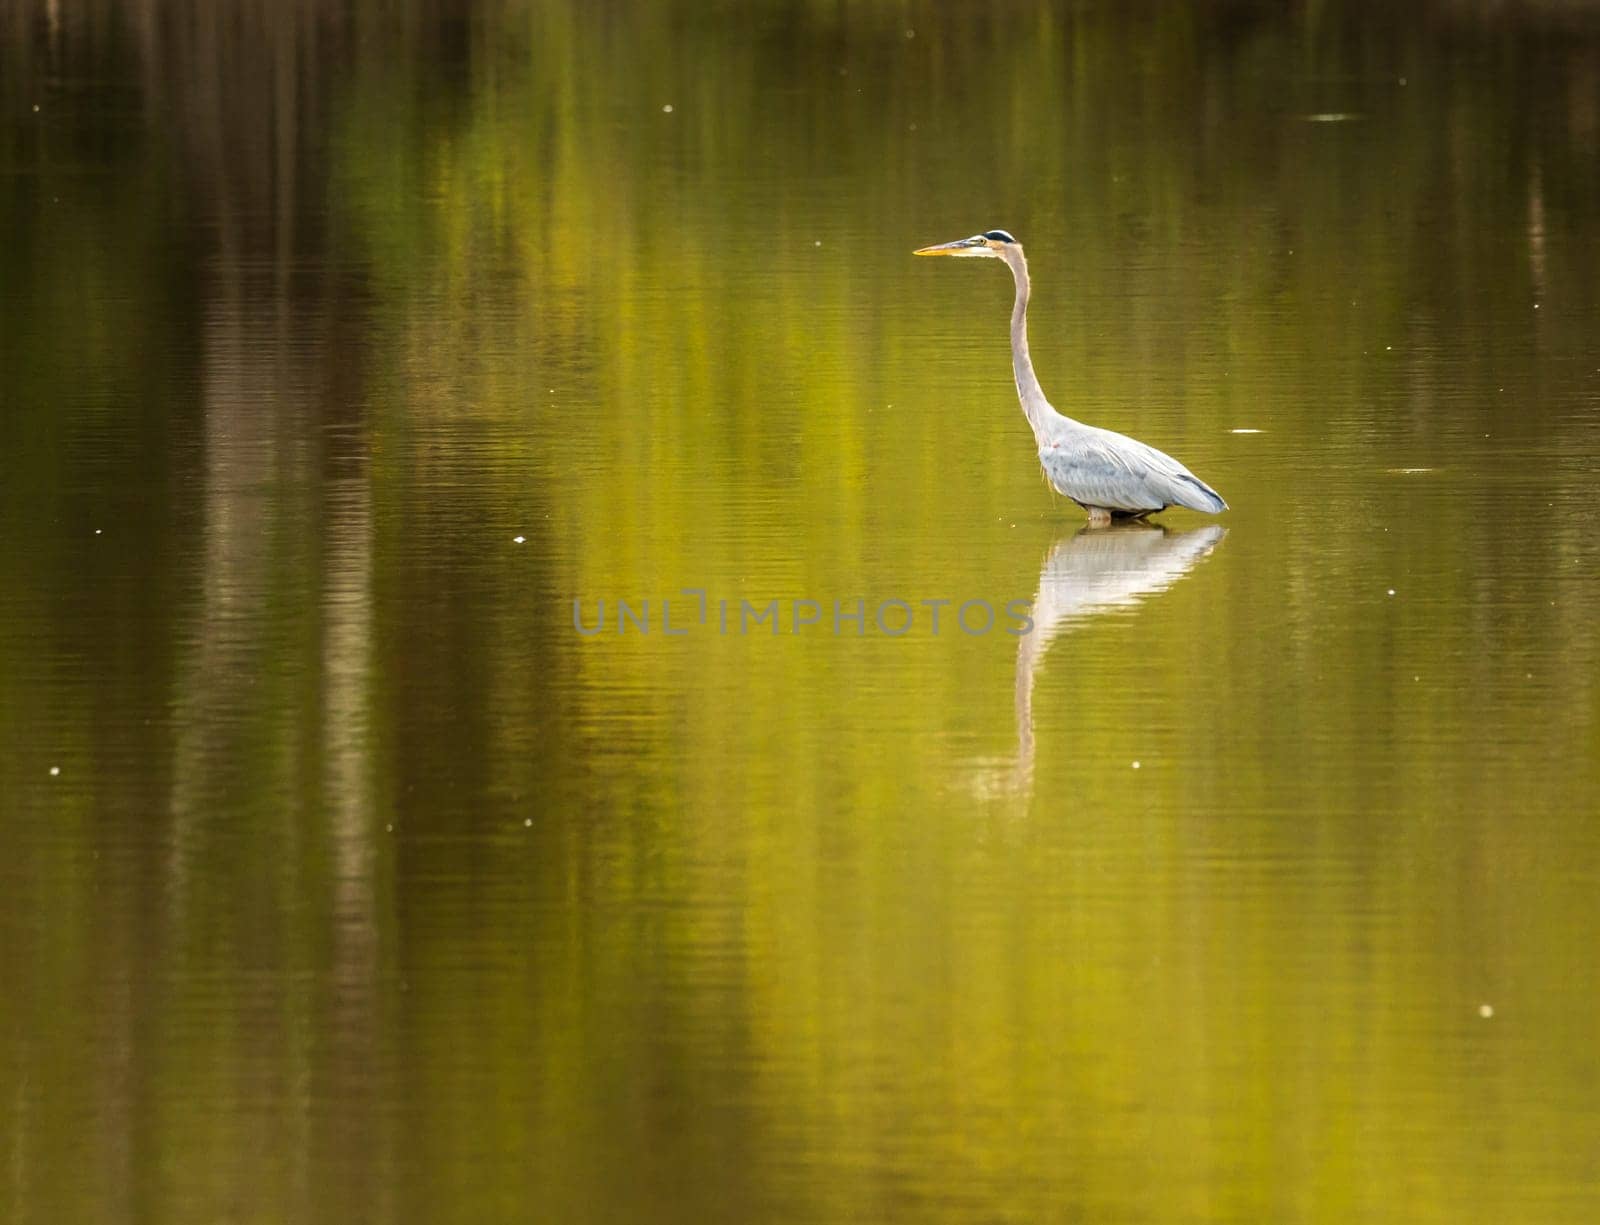 Great blue heron bird standing for portrait in the calm waters of Atchafalaya Basin near Baton Rouge Louisiana